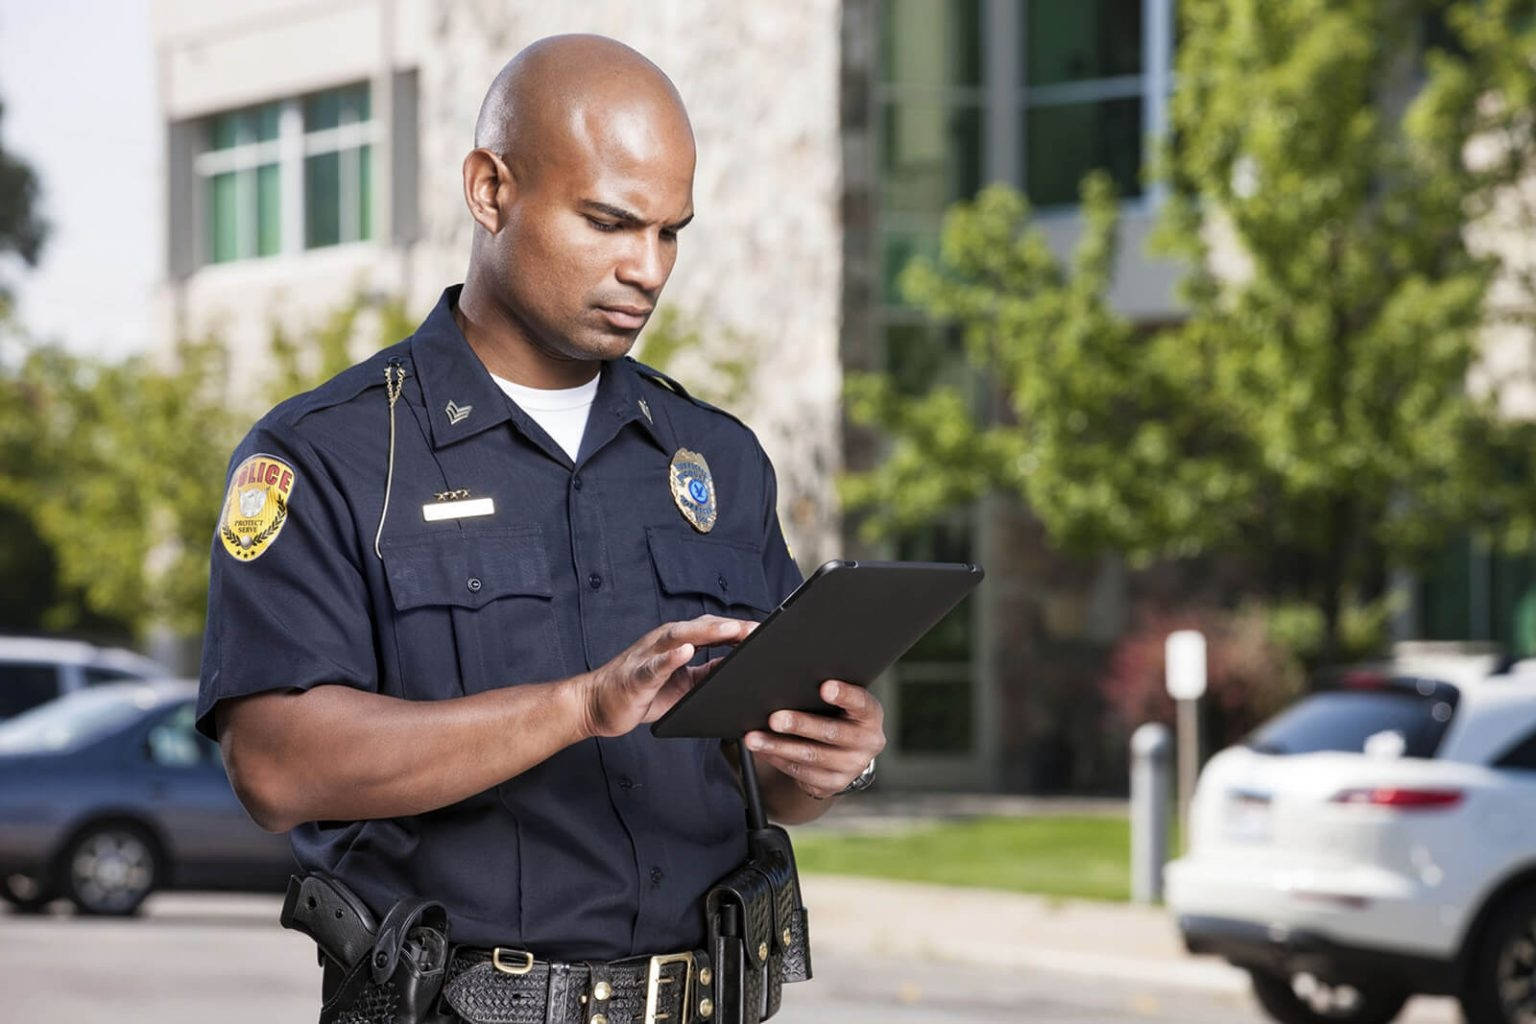 Politibetjent får adgang til håndholdte data i feltet. Wallpaper